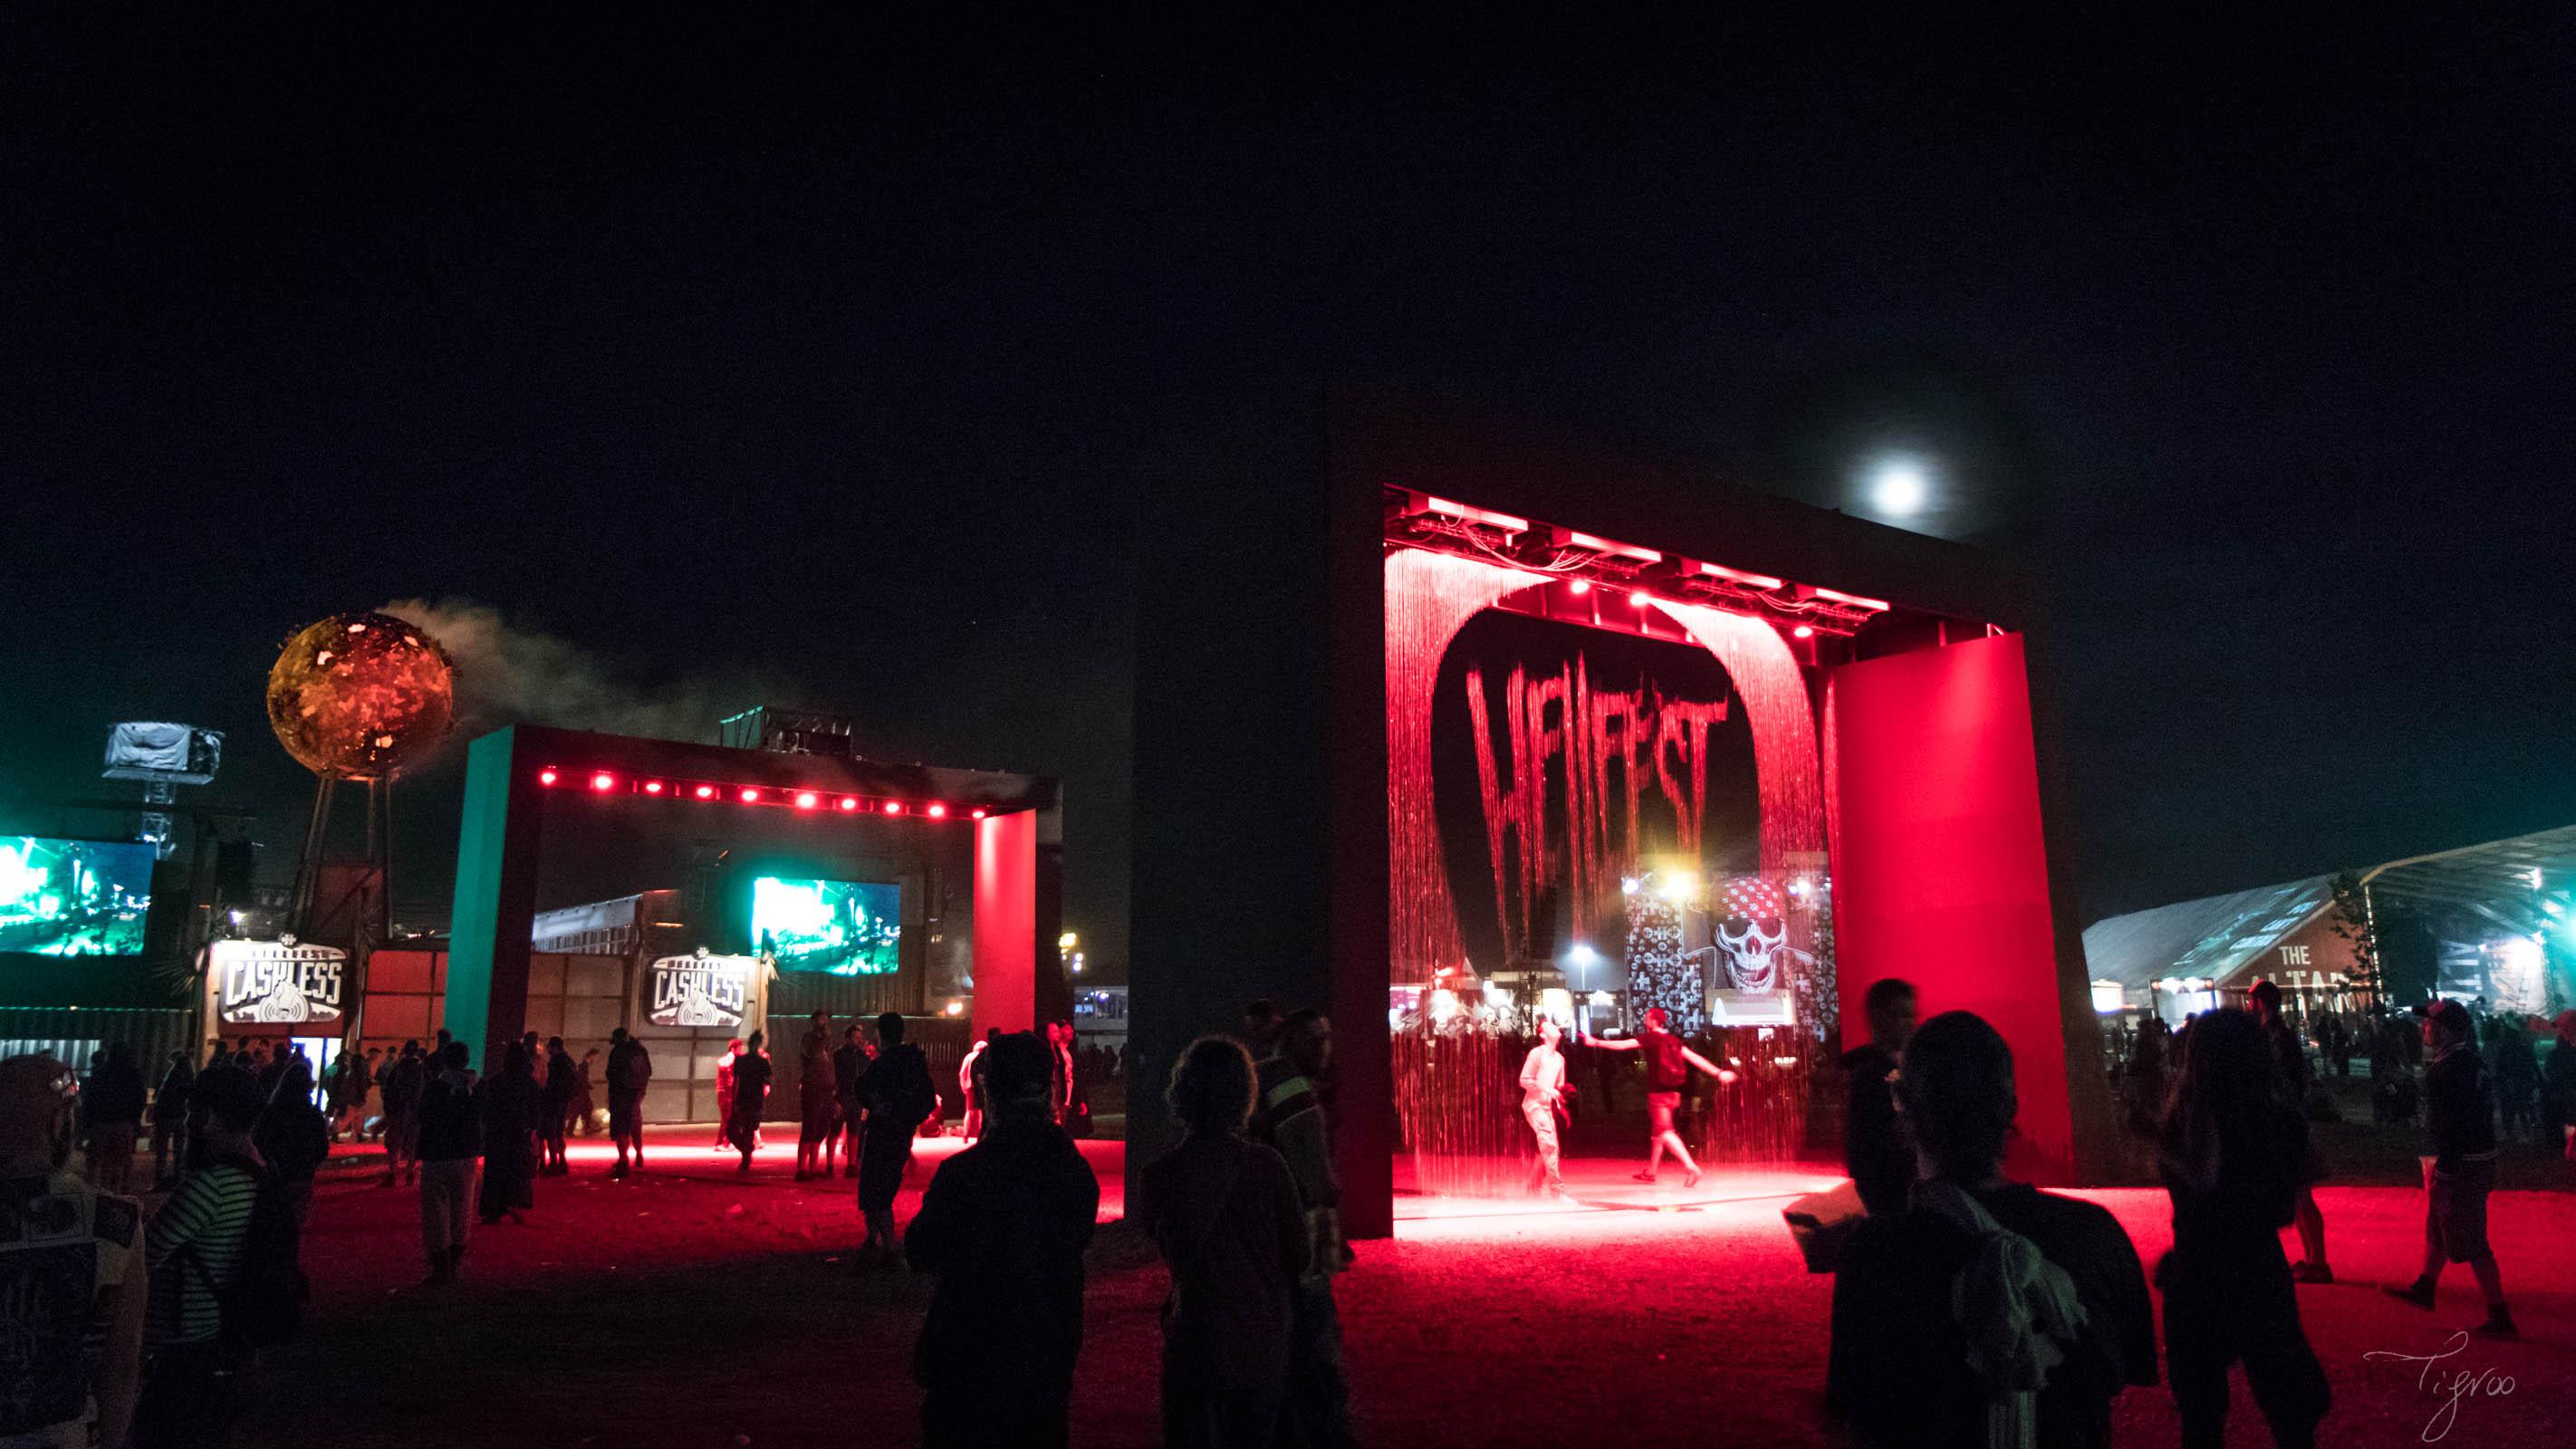 musique rock metal hellfest festival